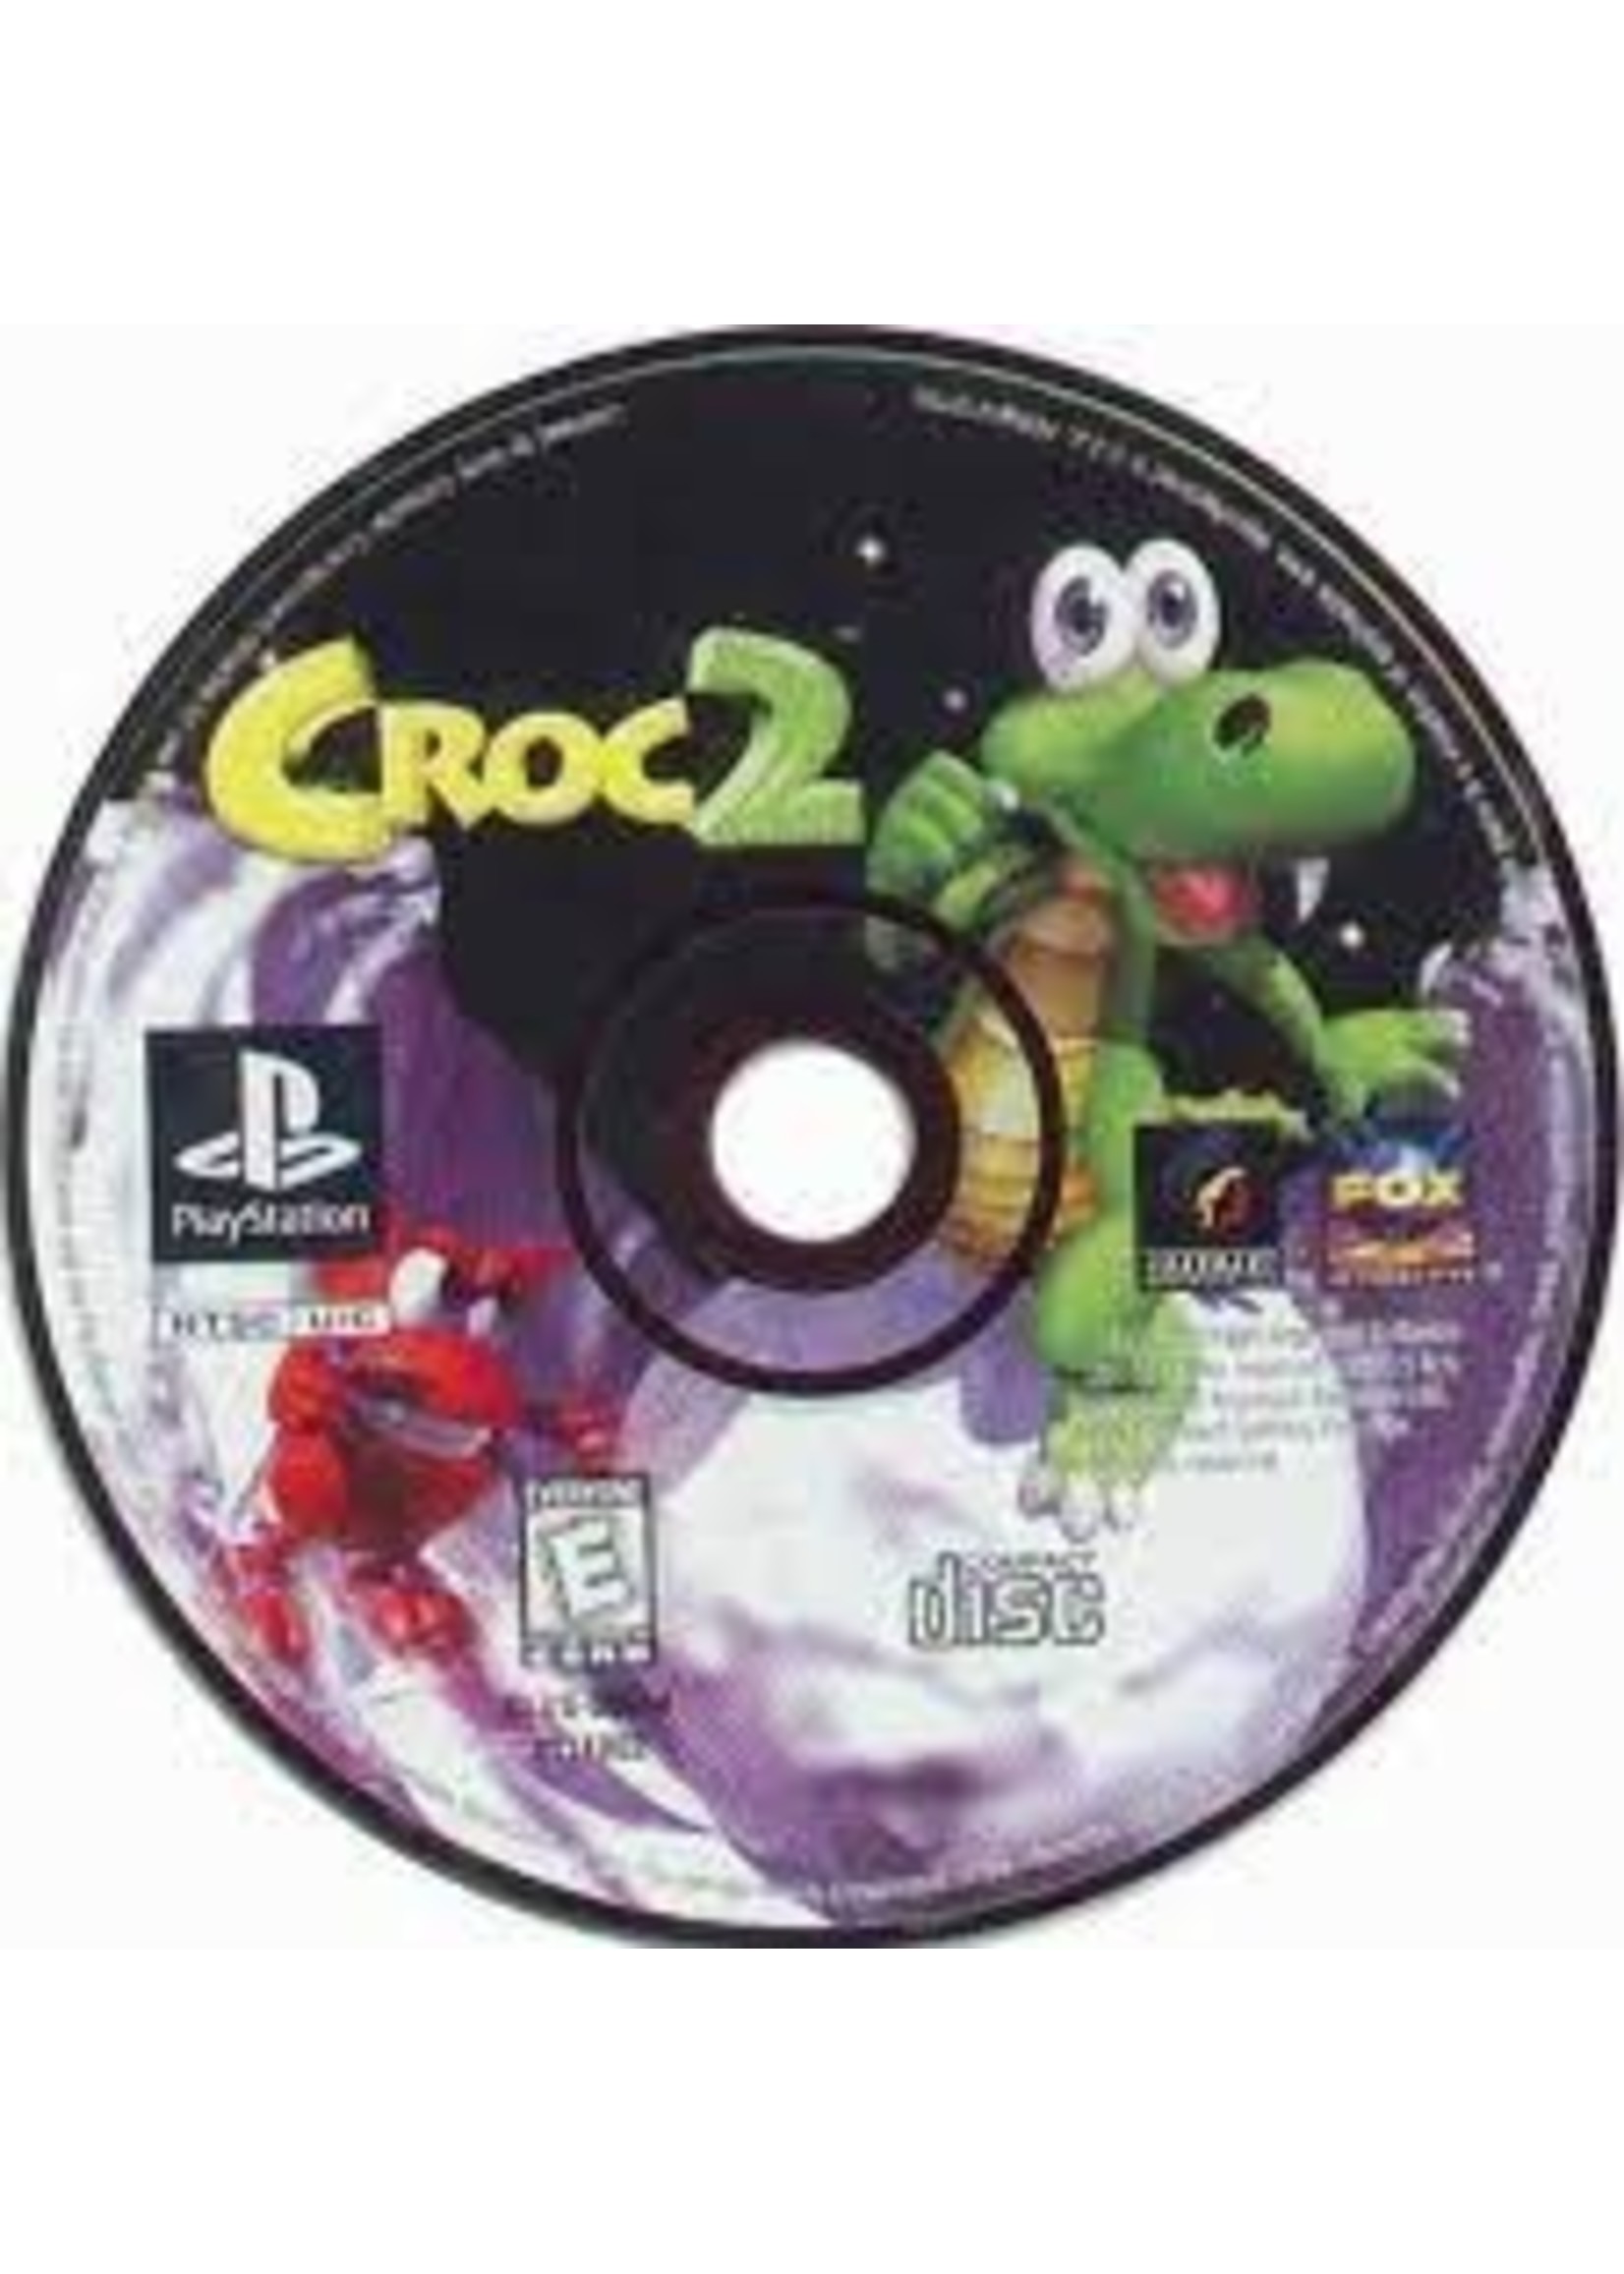 Sony Playstation 1 (PS1) Croc 2 - Print